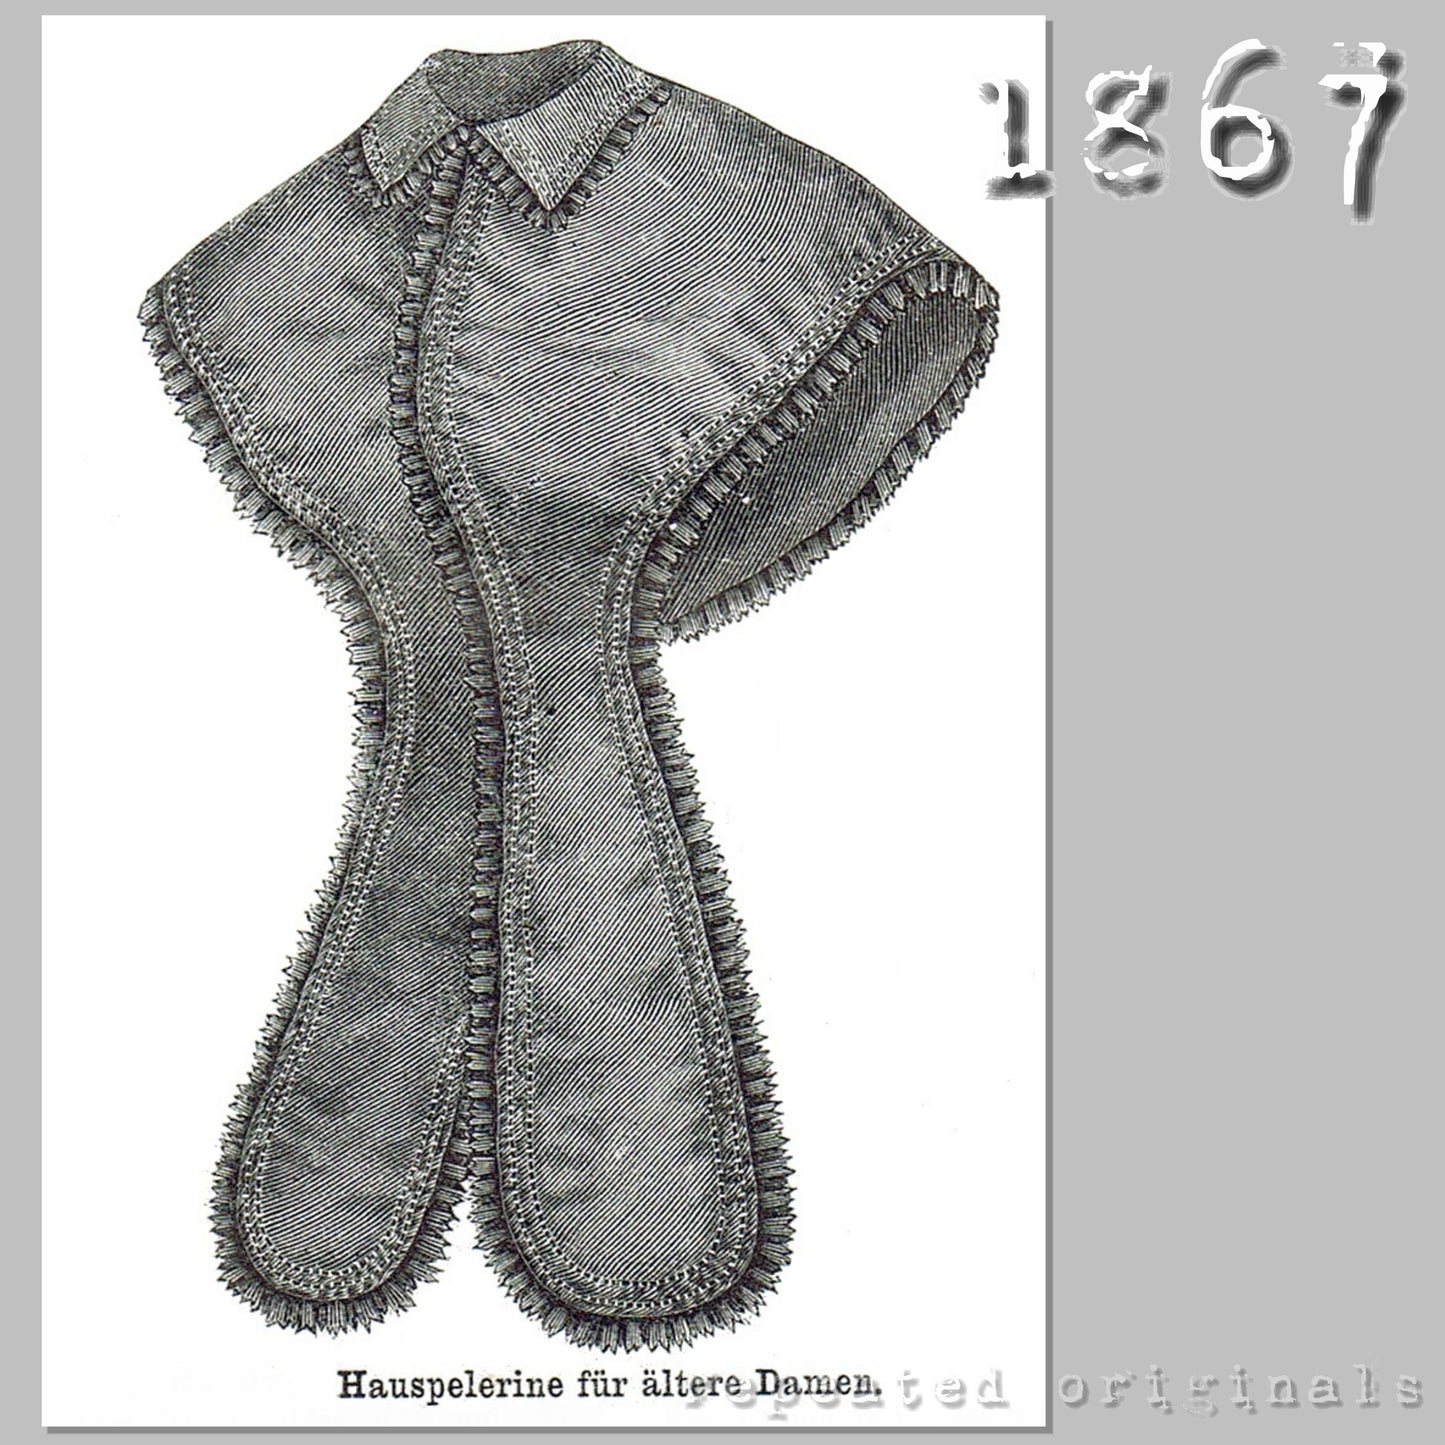 1867 House Pelerine for Older Ladies Sewing Pattern - INSTANT DOWNLOAD PDF